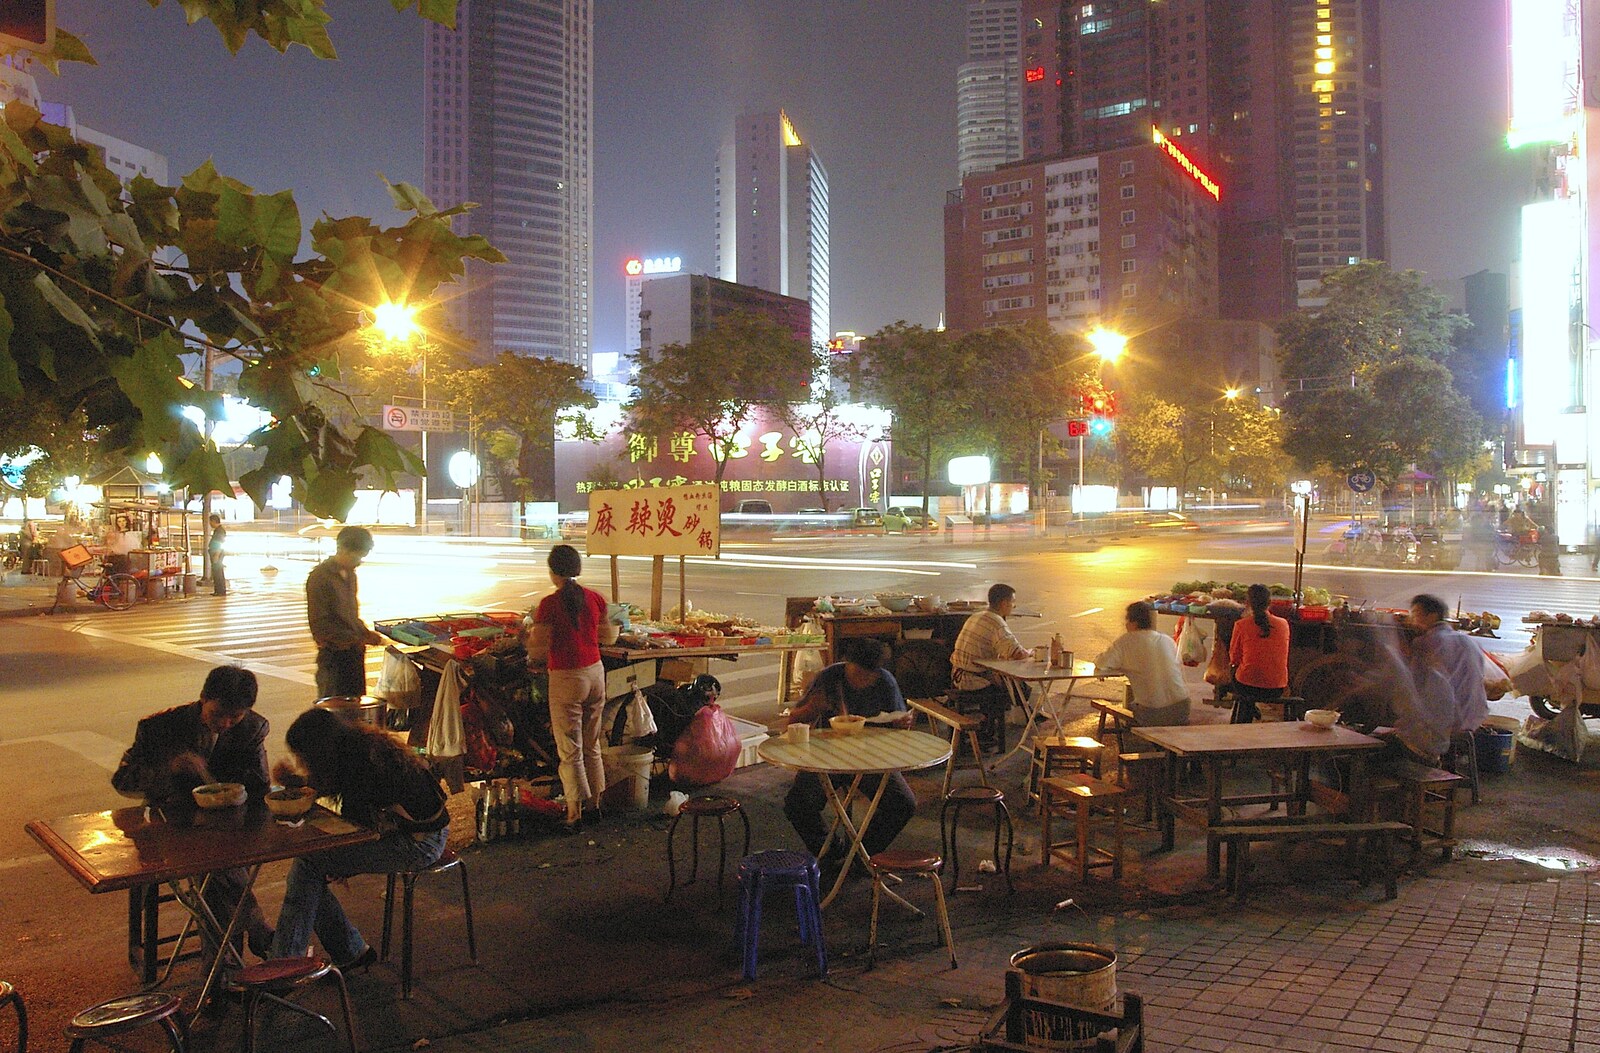 Outdoor café tables from Nanjing by Night, Nanjing, Jiangsu Province, China - 4th October 2006